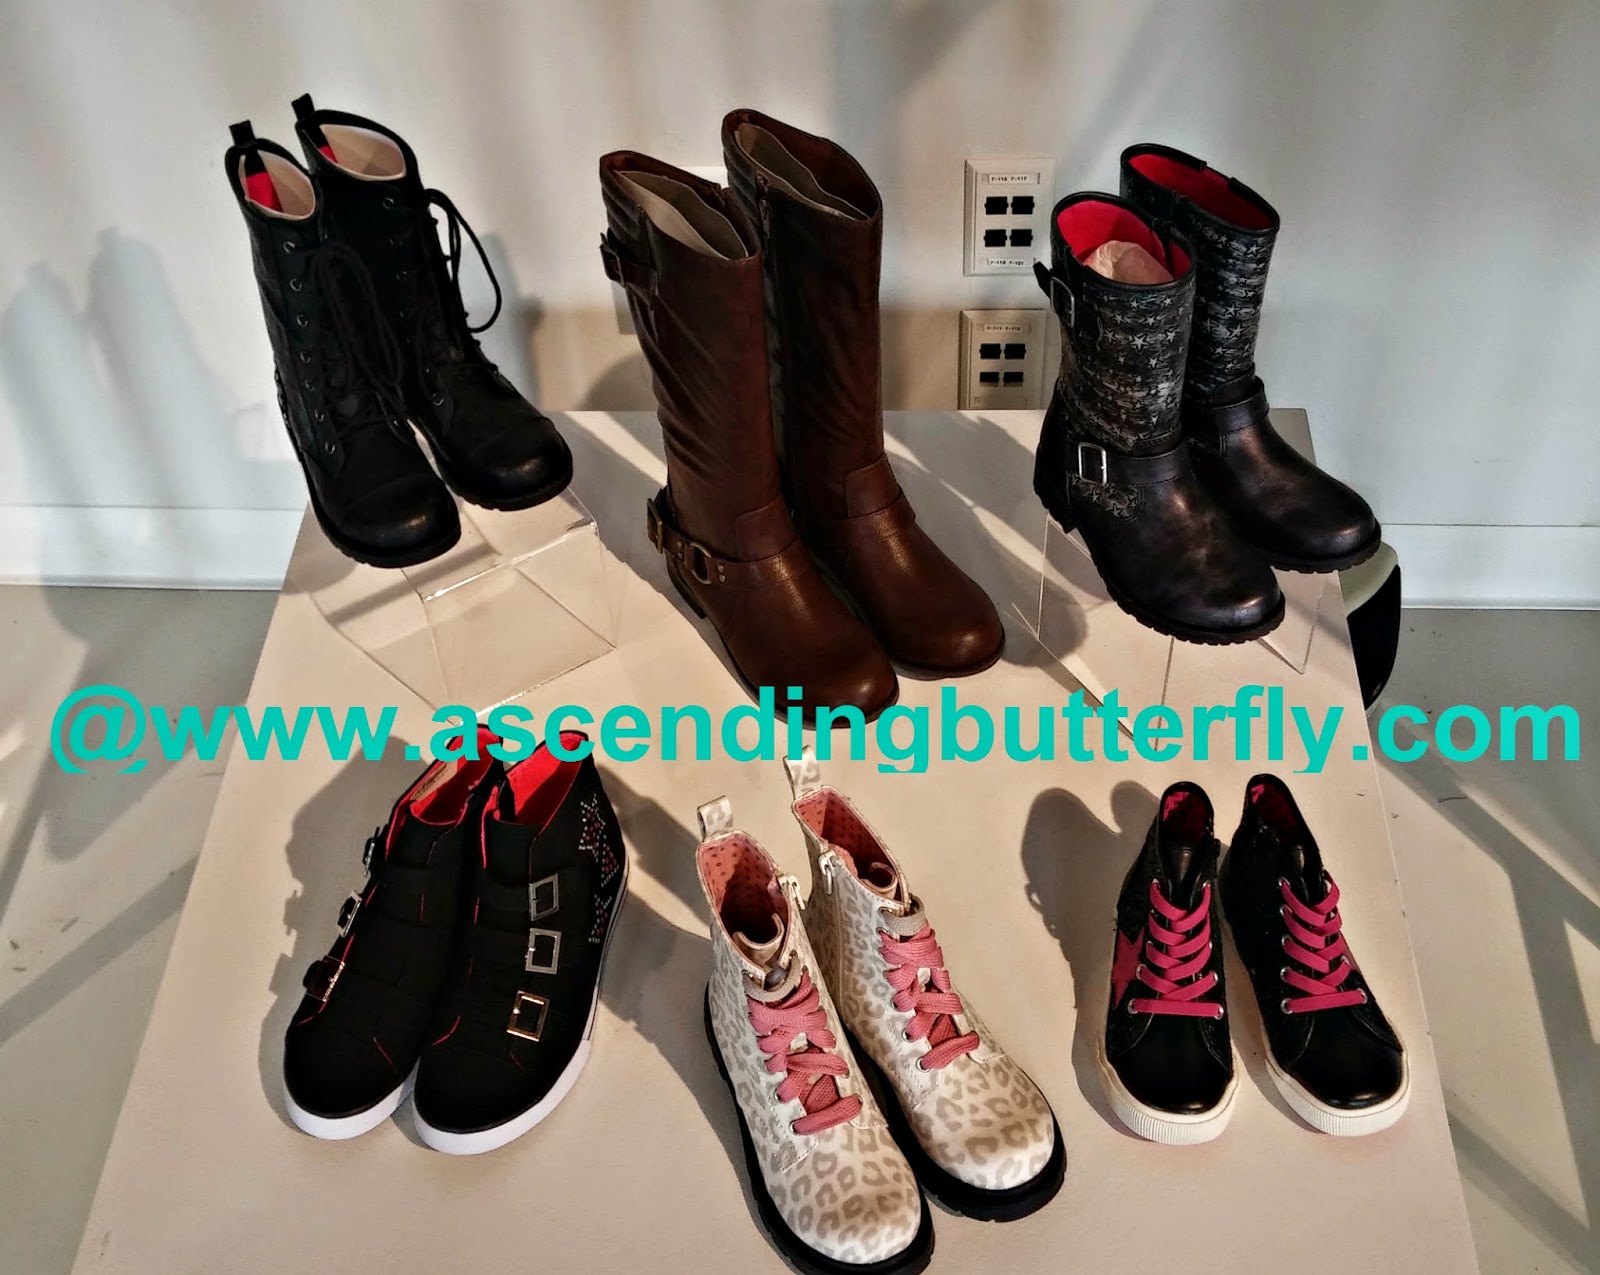 Girls Footwear via JCPenney 2014 Back-to-School Press Preview, Shoes, Girls, Fashion Footwear